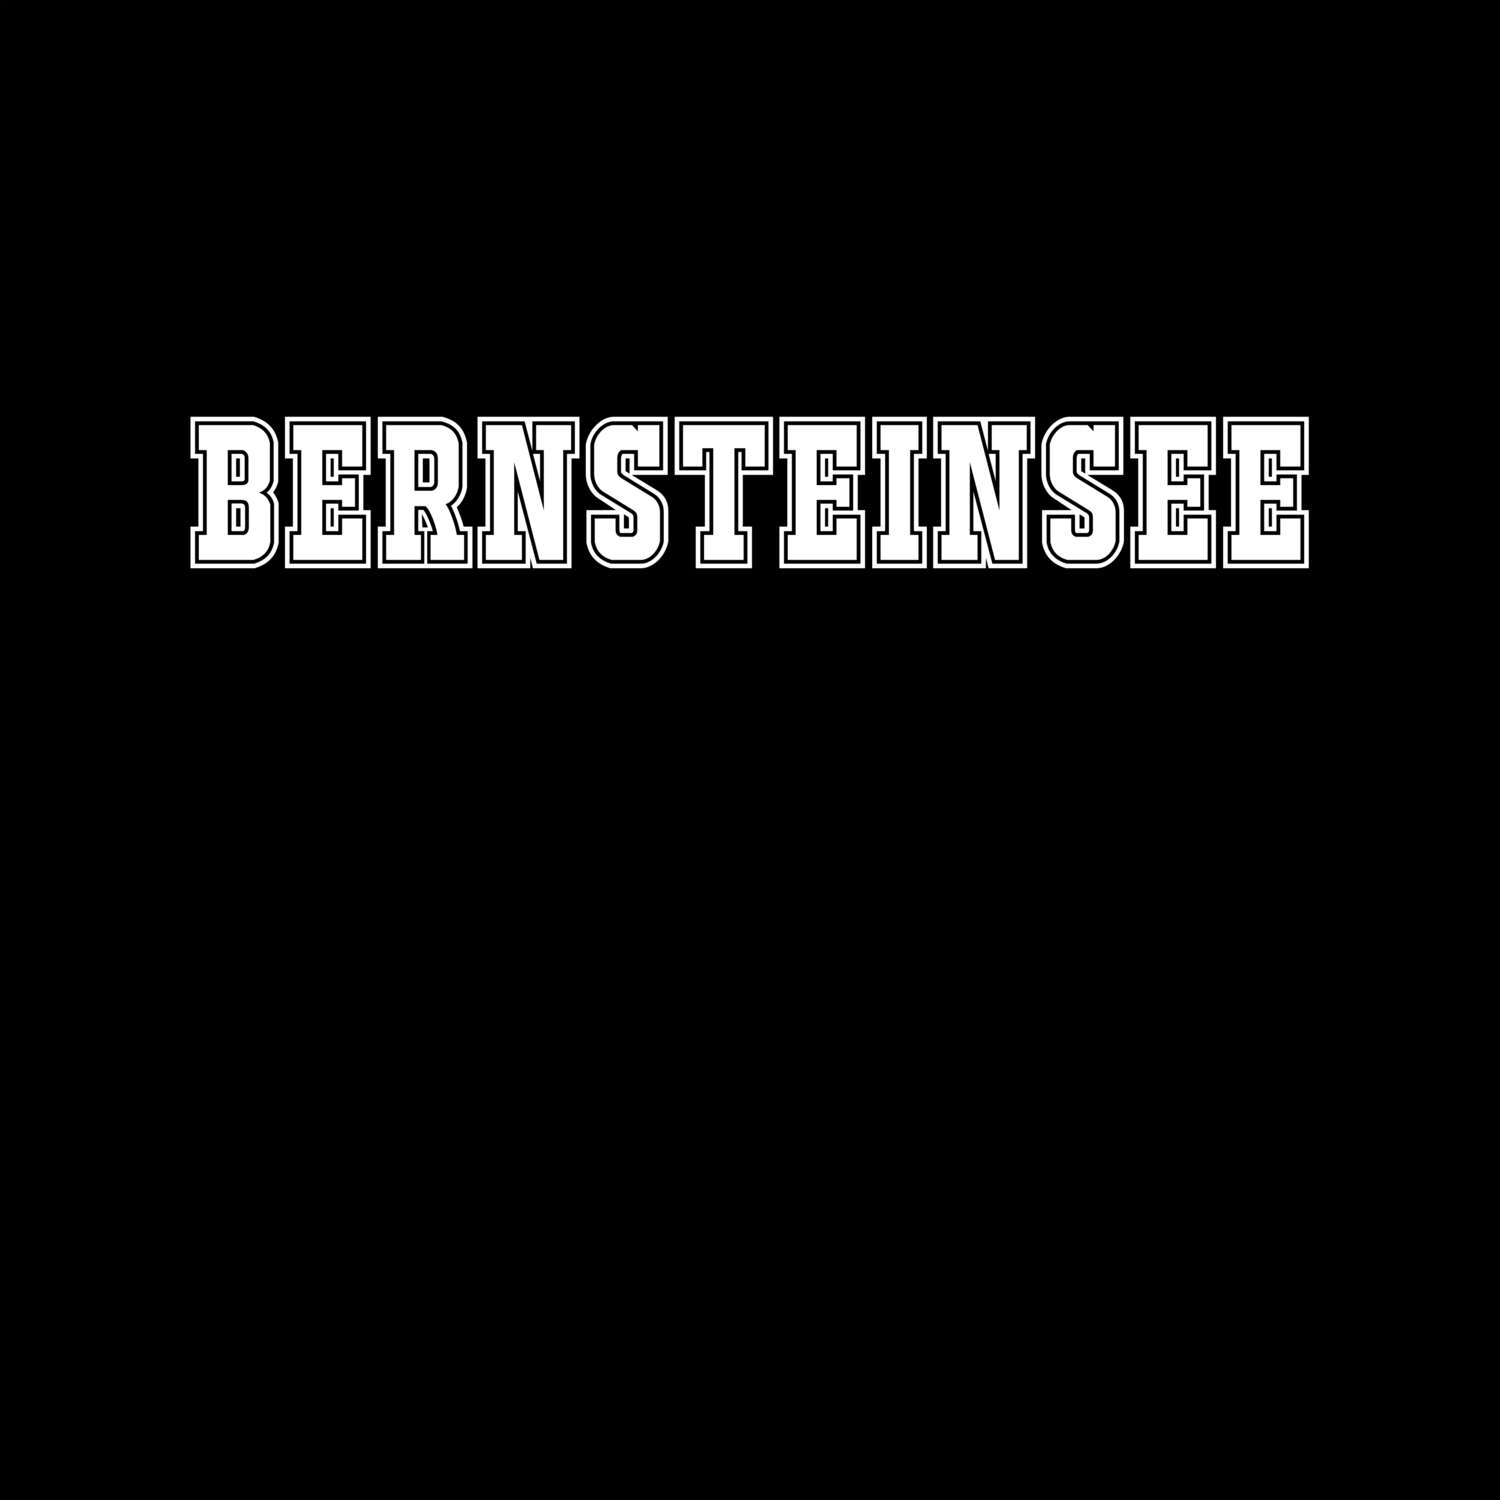 Bernsteinsee T-Shirt »Classic«